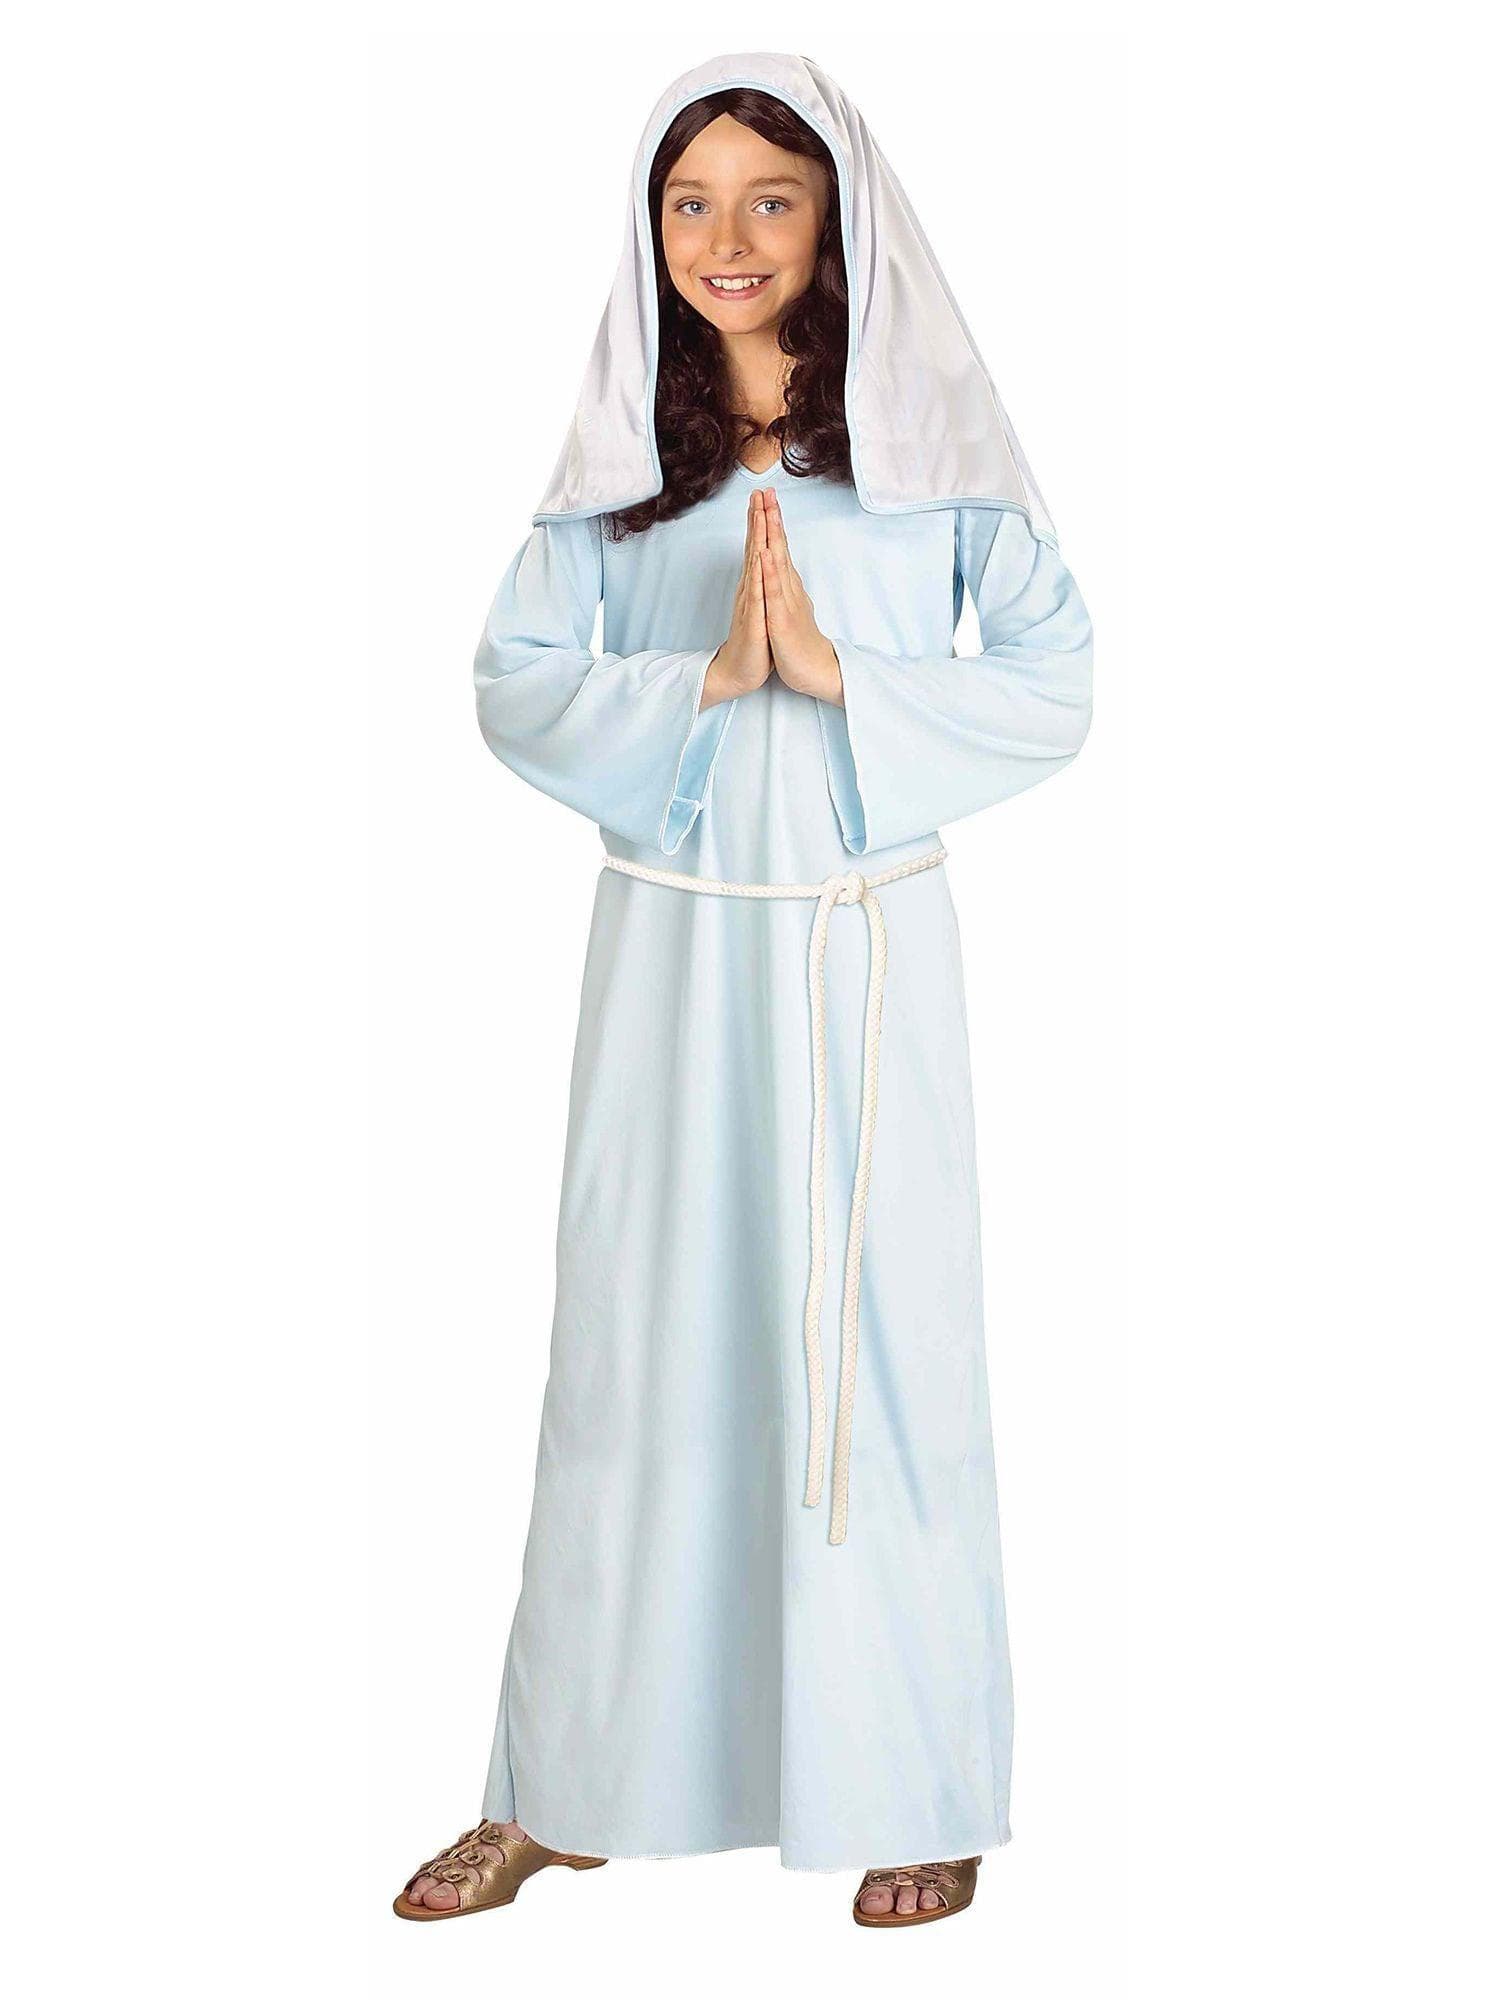 Girls' Virgin Mary Costume - costumes.com